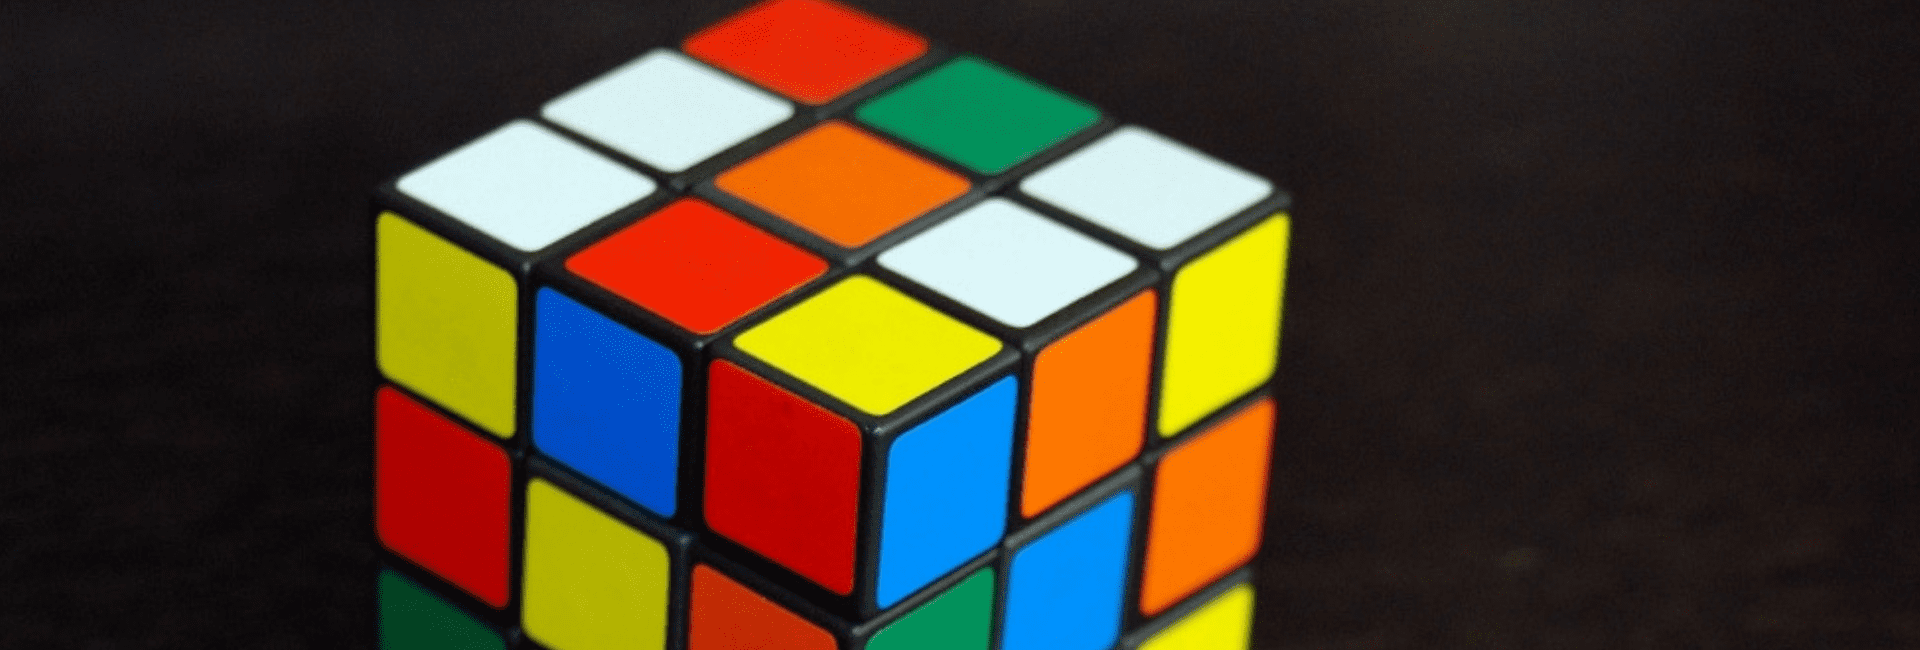 bandeau Rubik's Cube